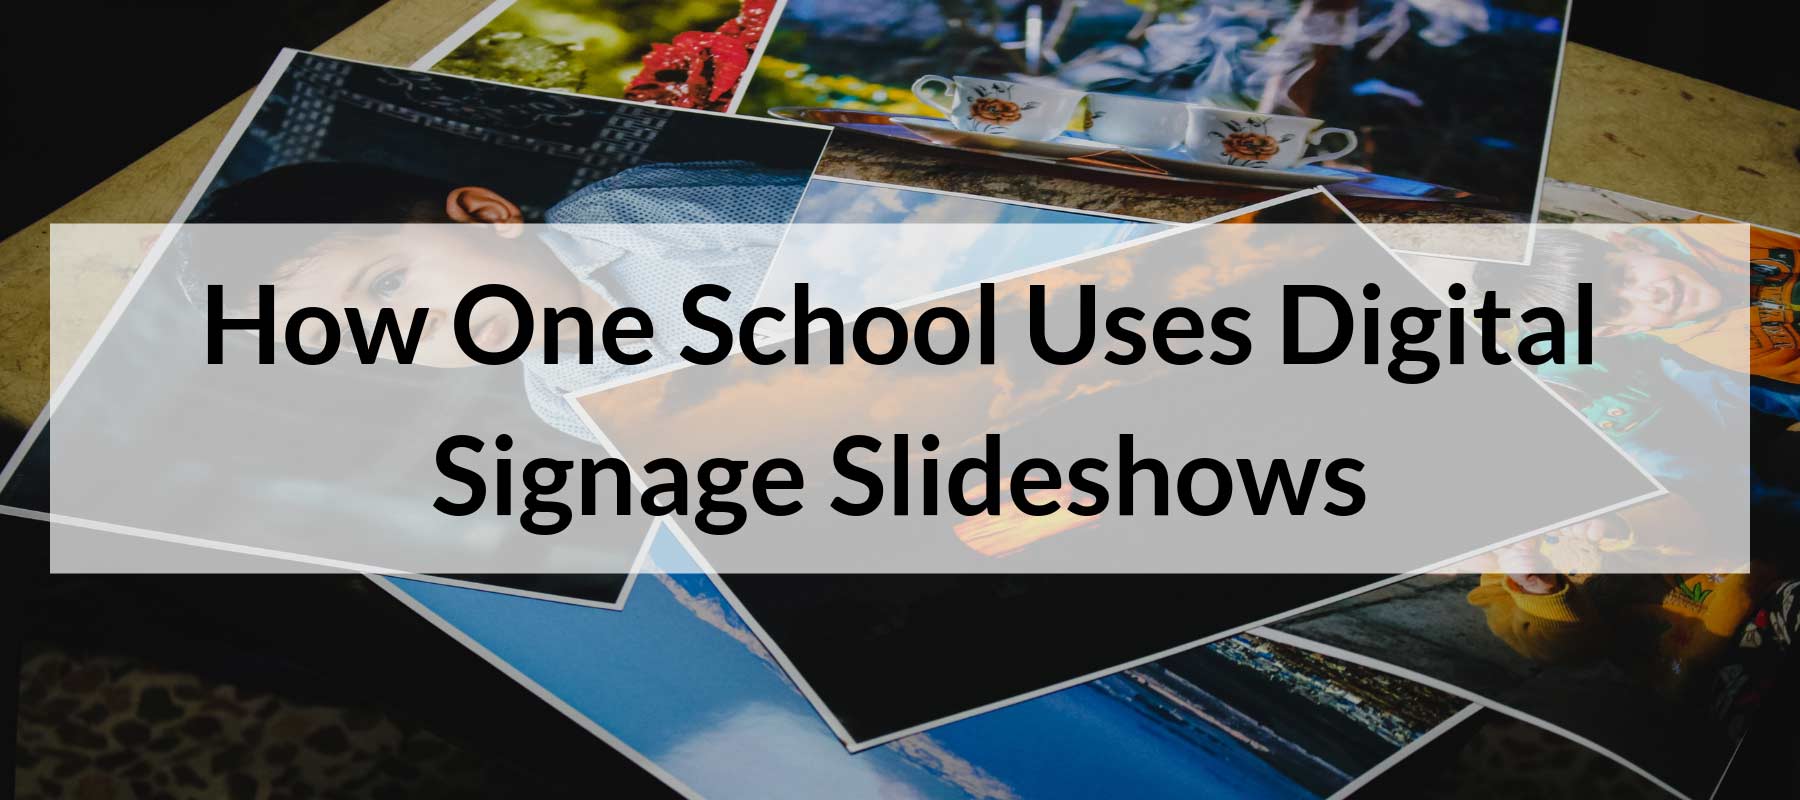 How One School Uses Digital Signage Slideshows